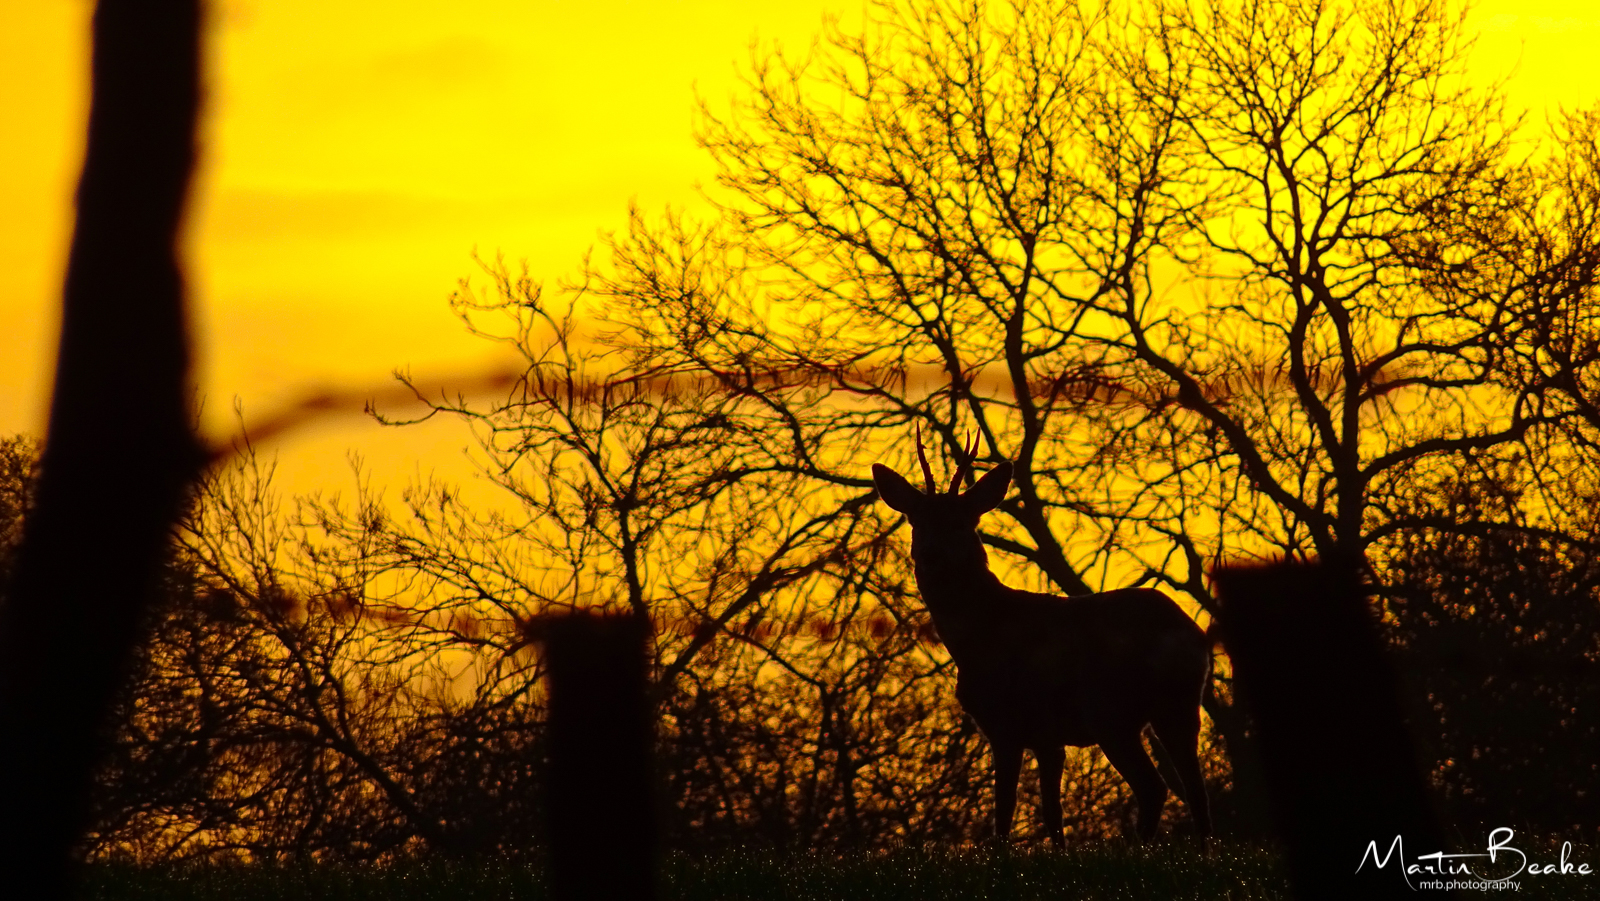 Sunrise Deer